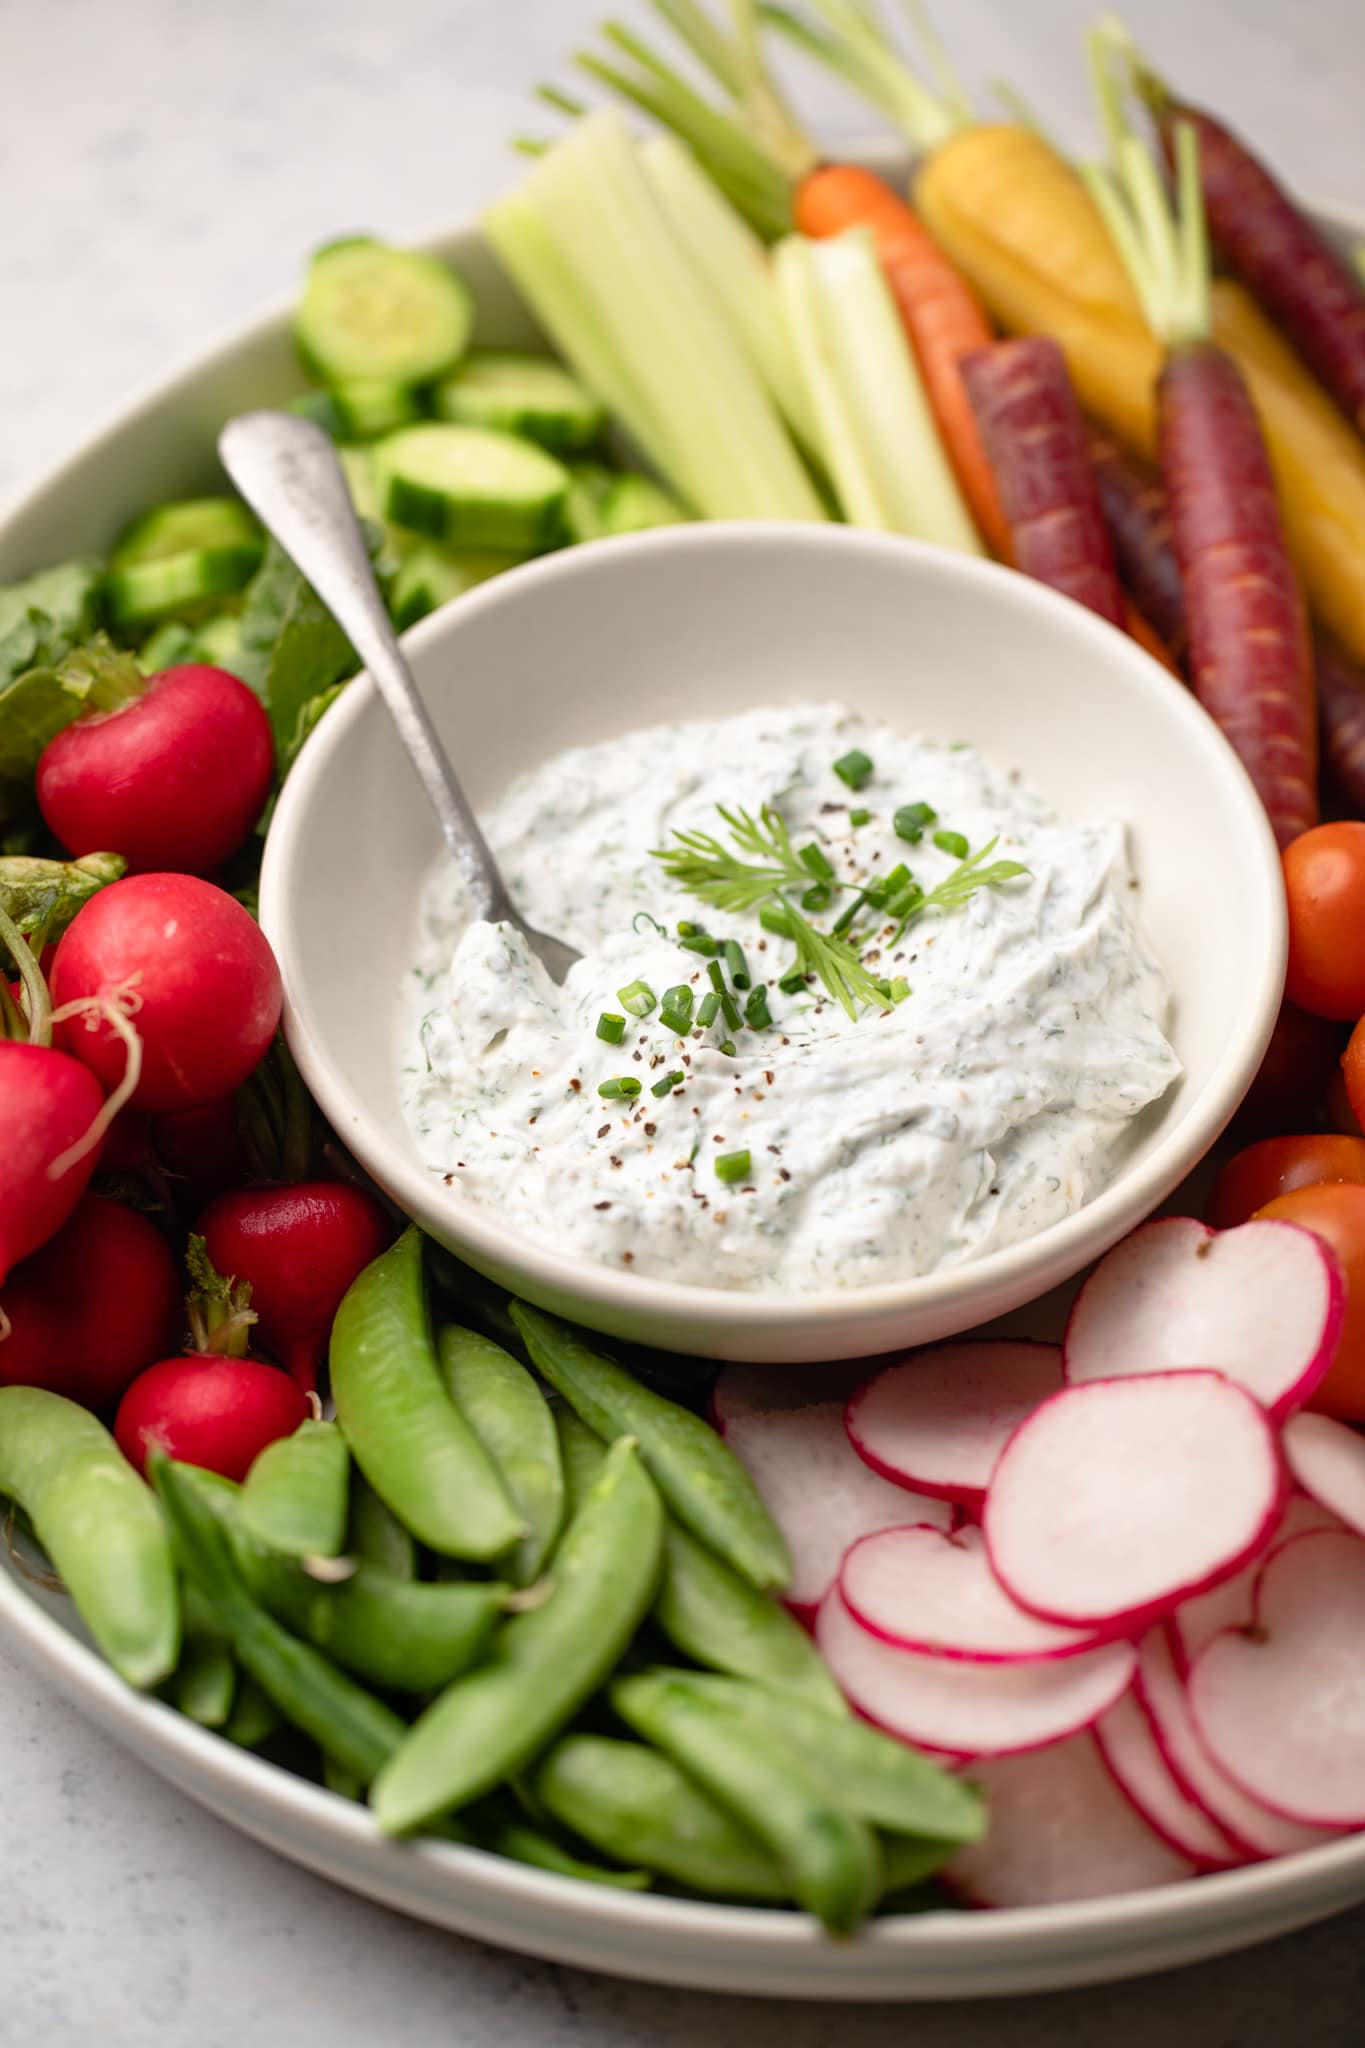 Greek Yogurt ranch dip with spoon and veggies